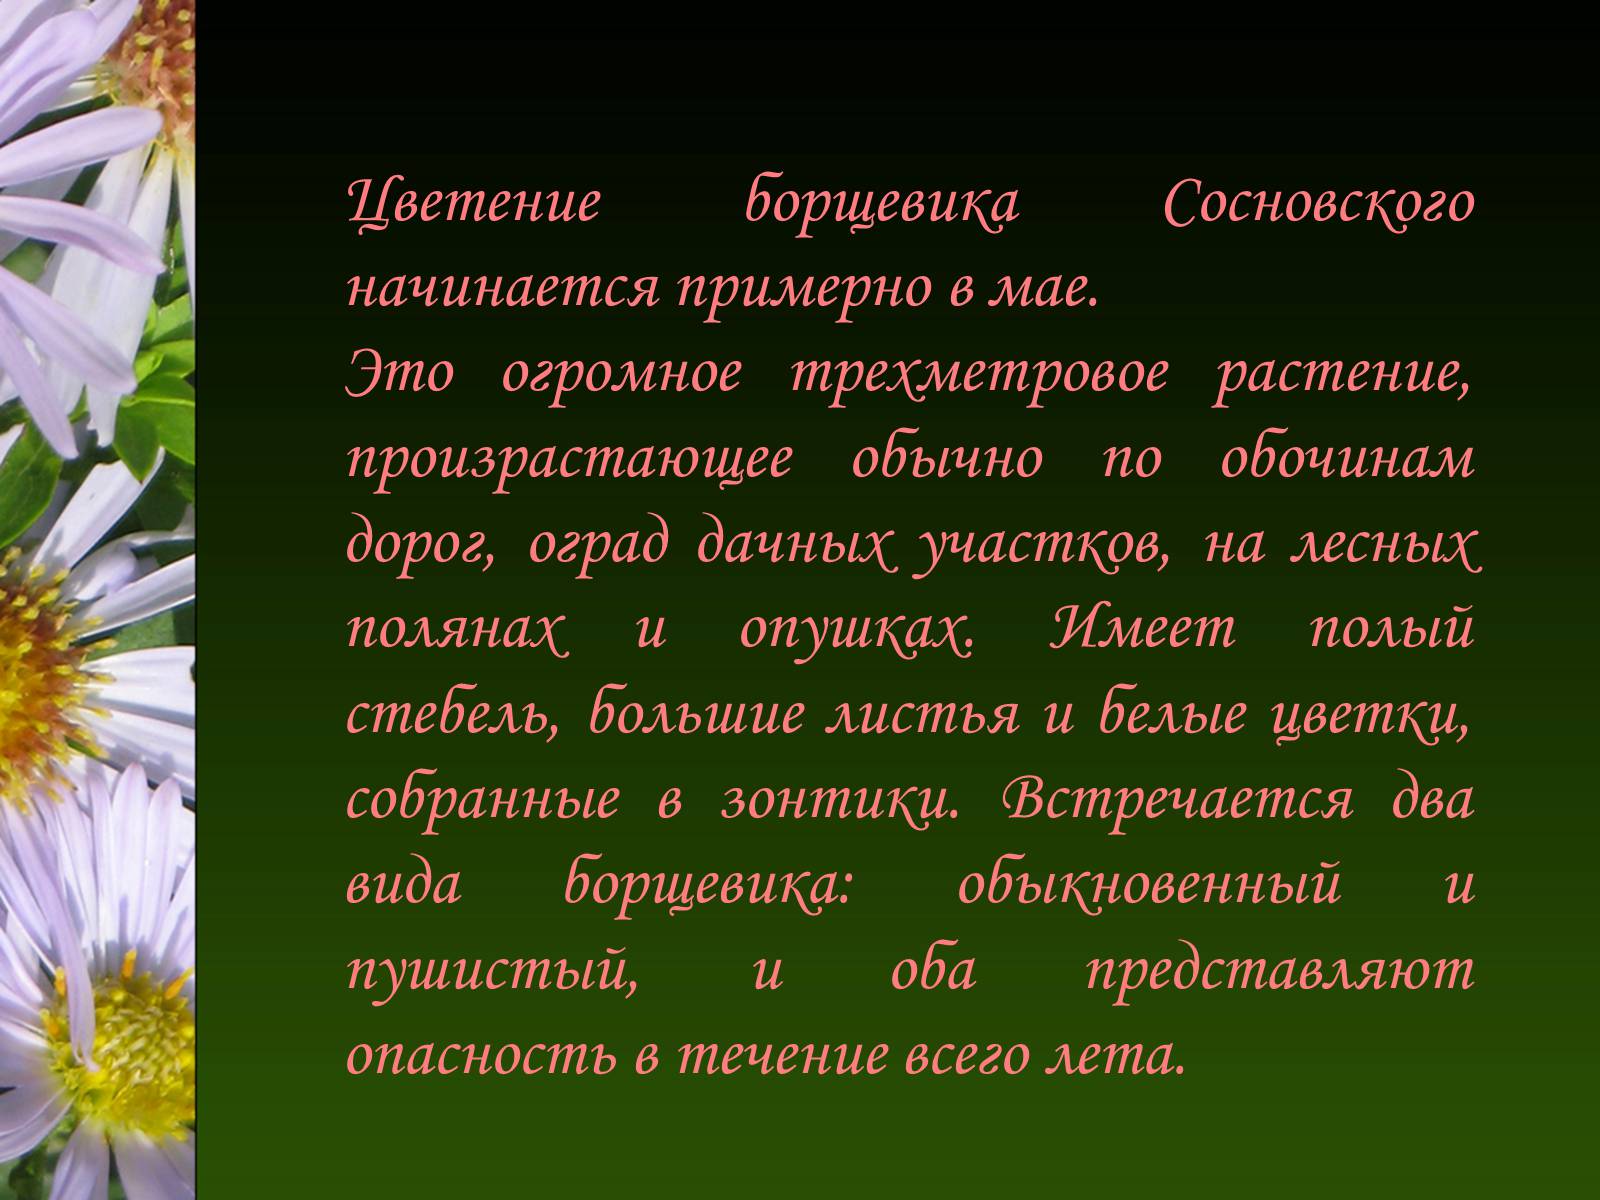 Презентація на тему «Ядовитые растения Украины» - Слайд #4